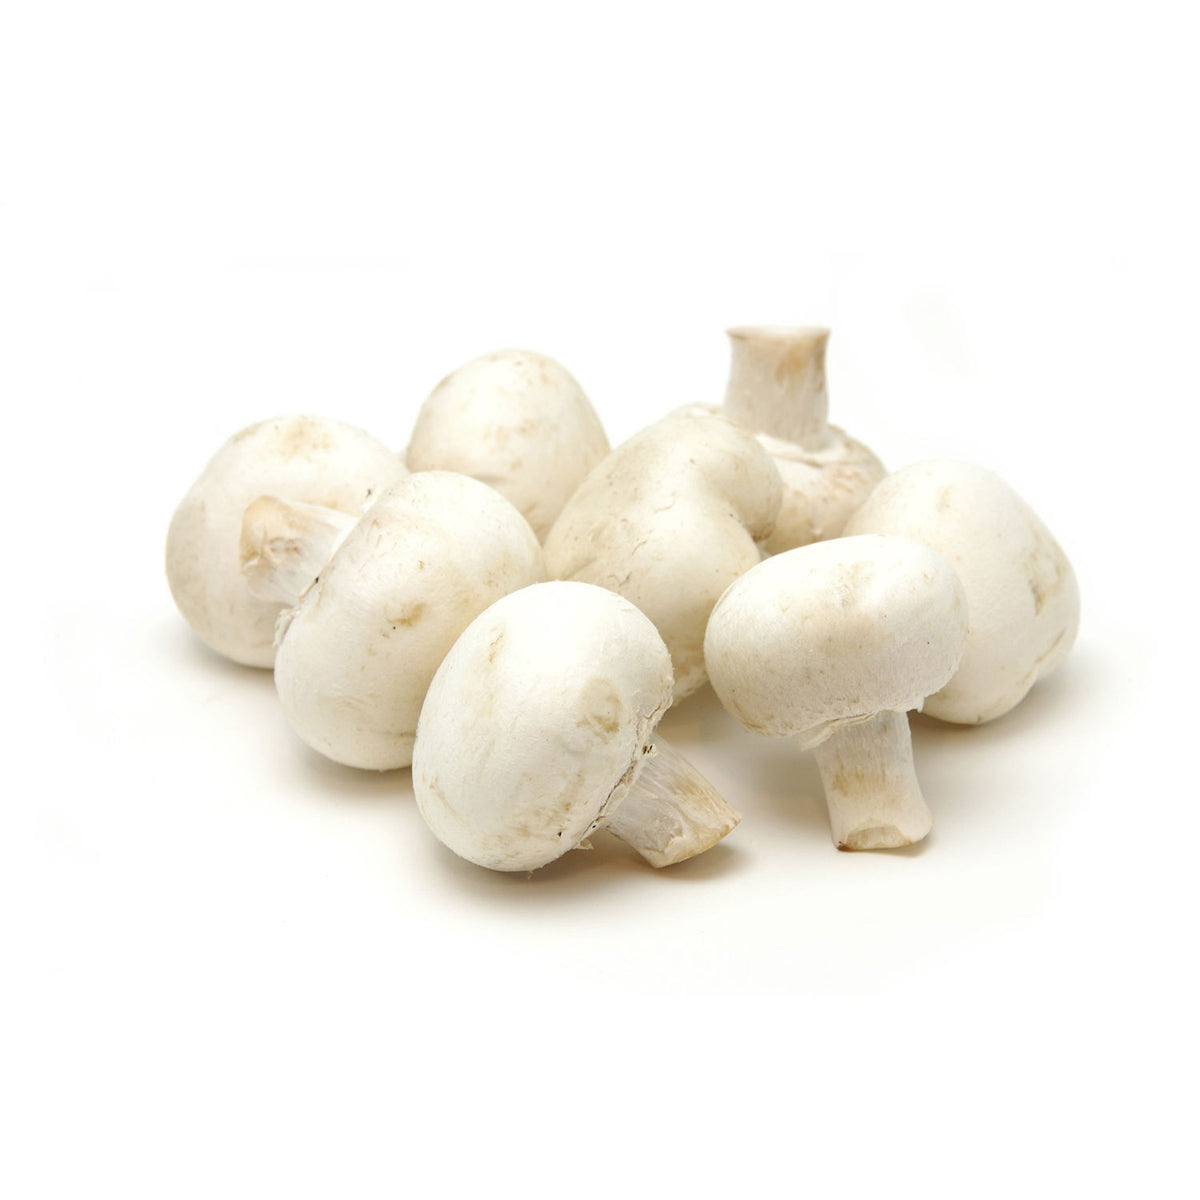 White Mushrooms in Port Harcourt